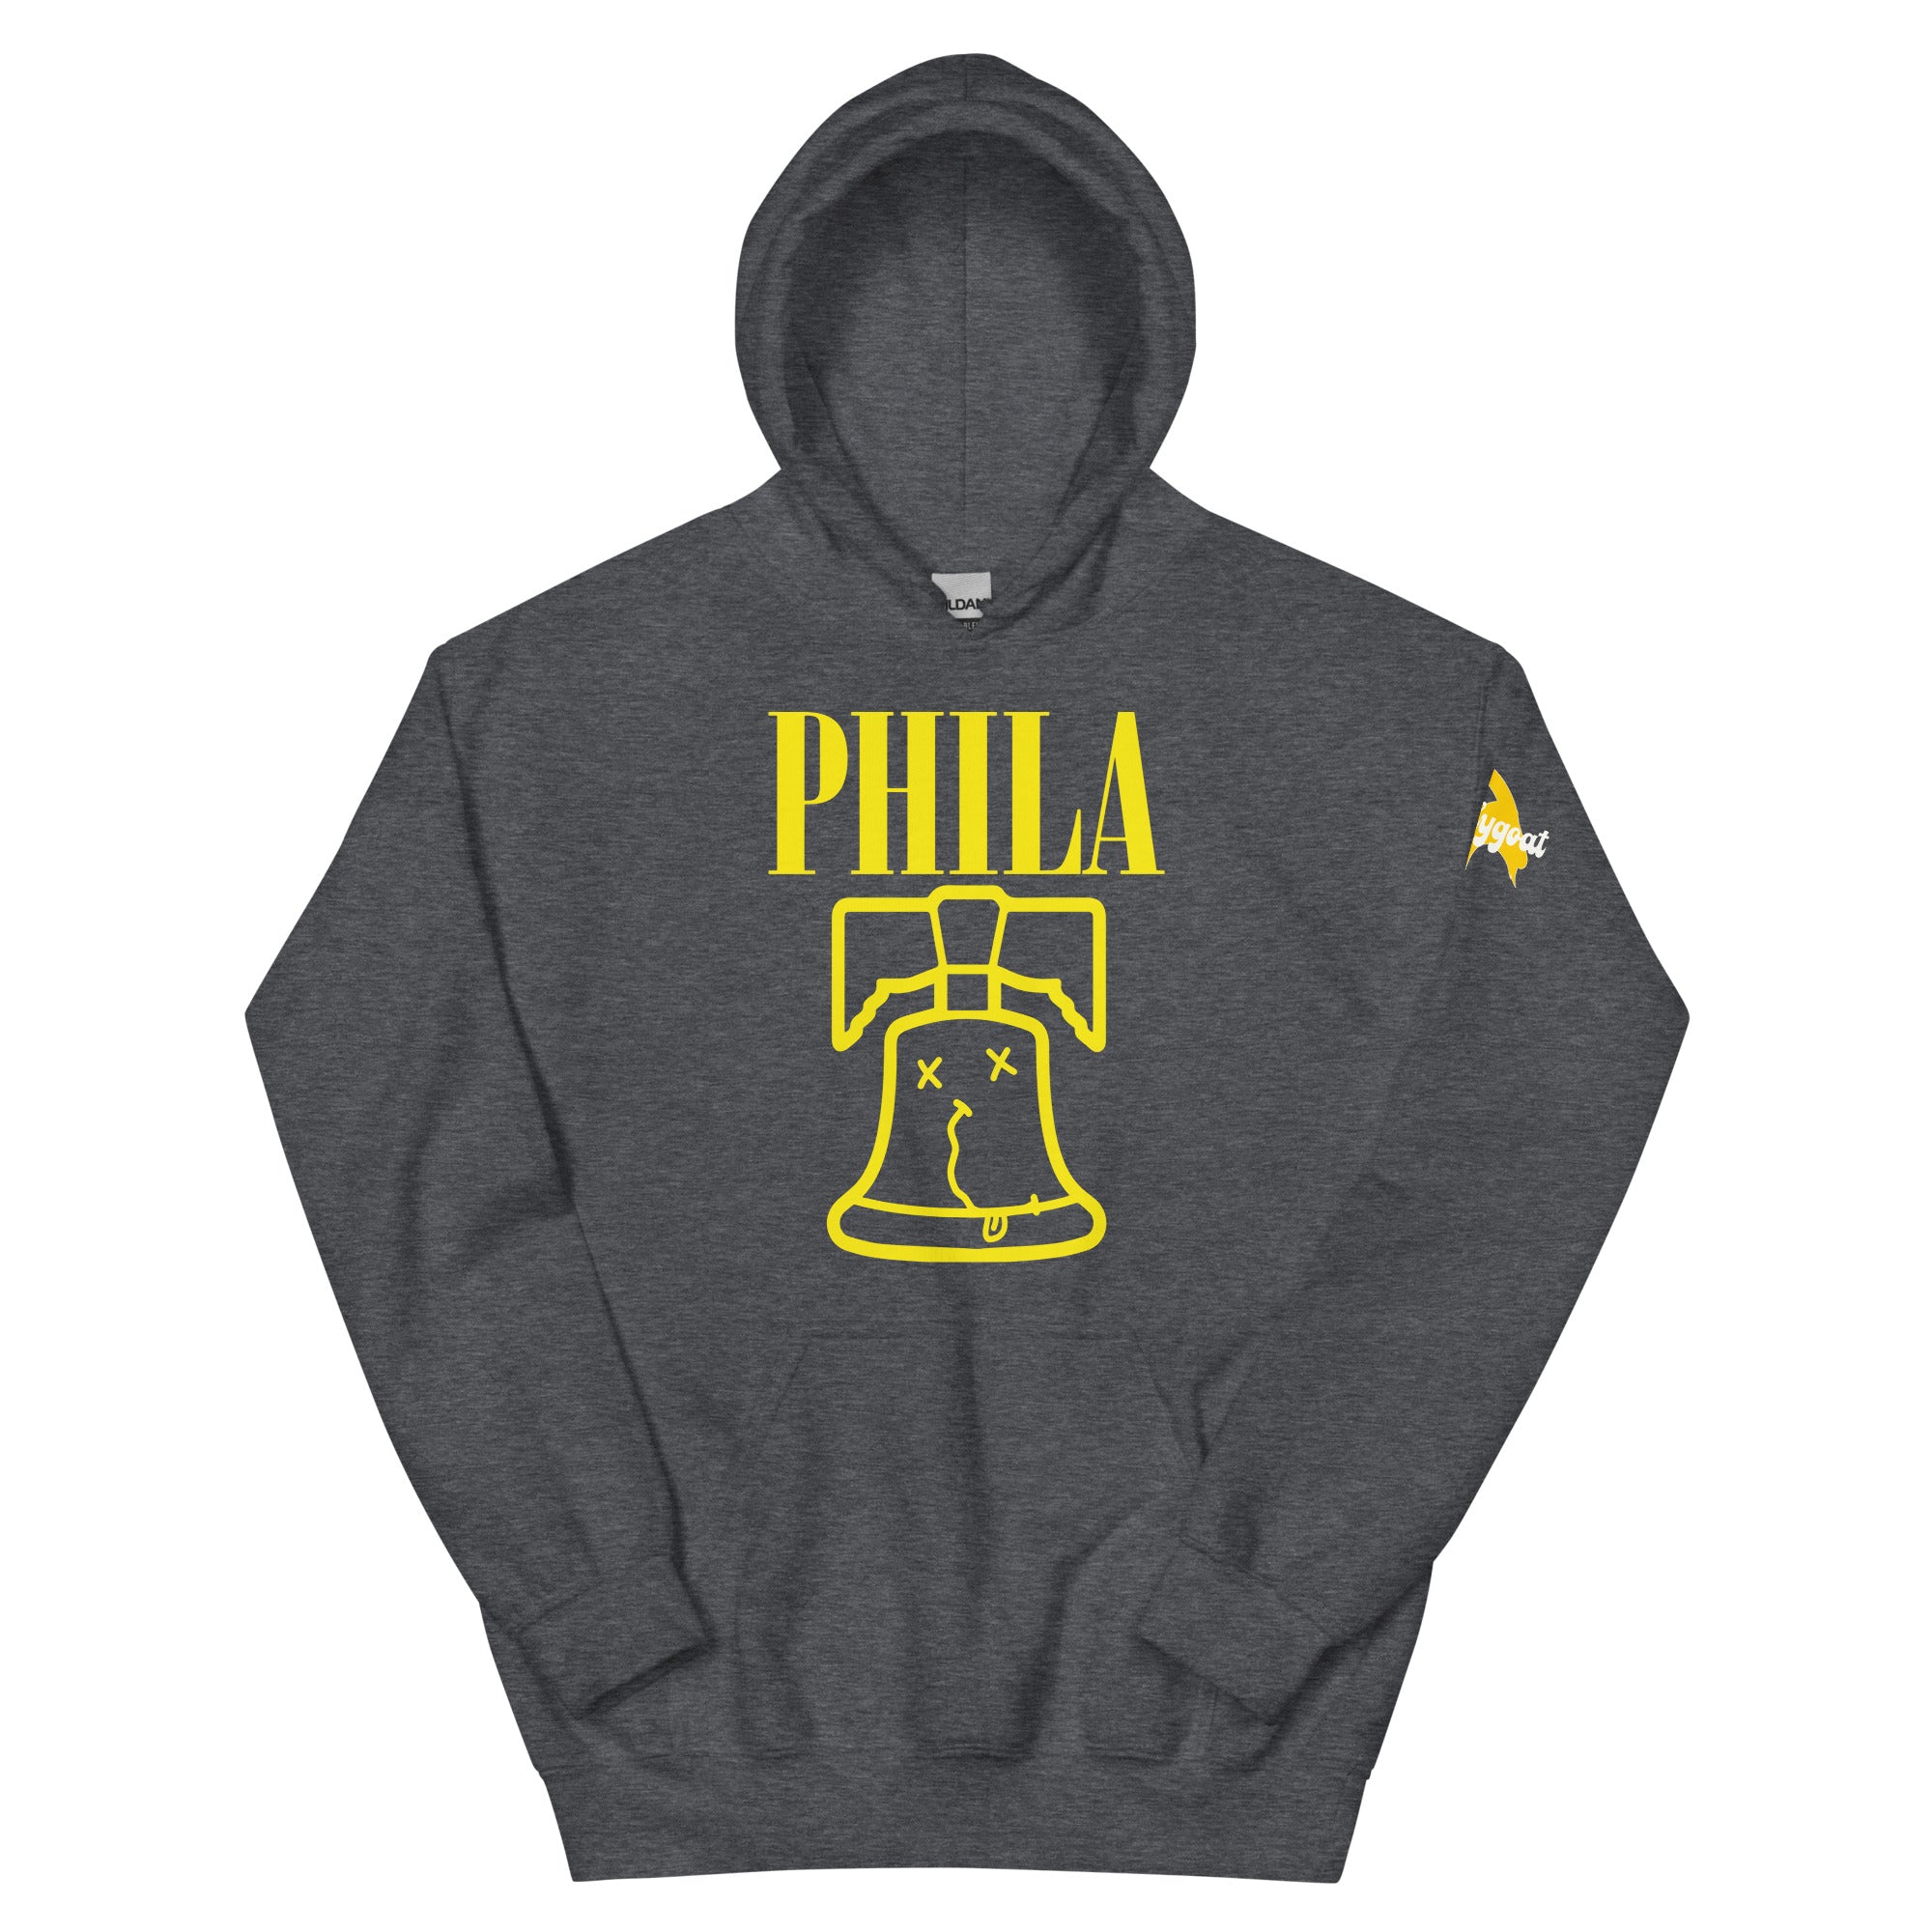 Philadelphia Nirvana dark heather grey hoodie Phillygoat